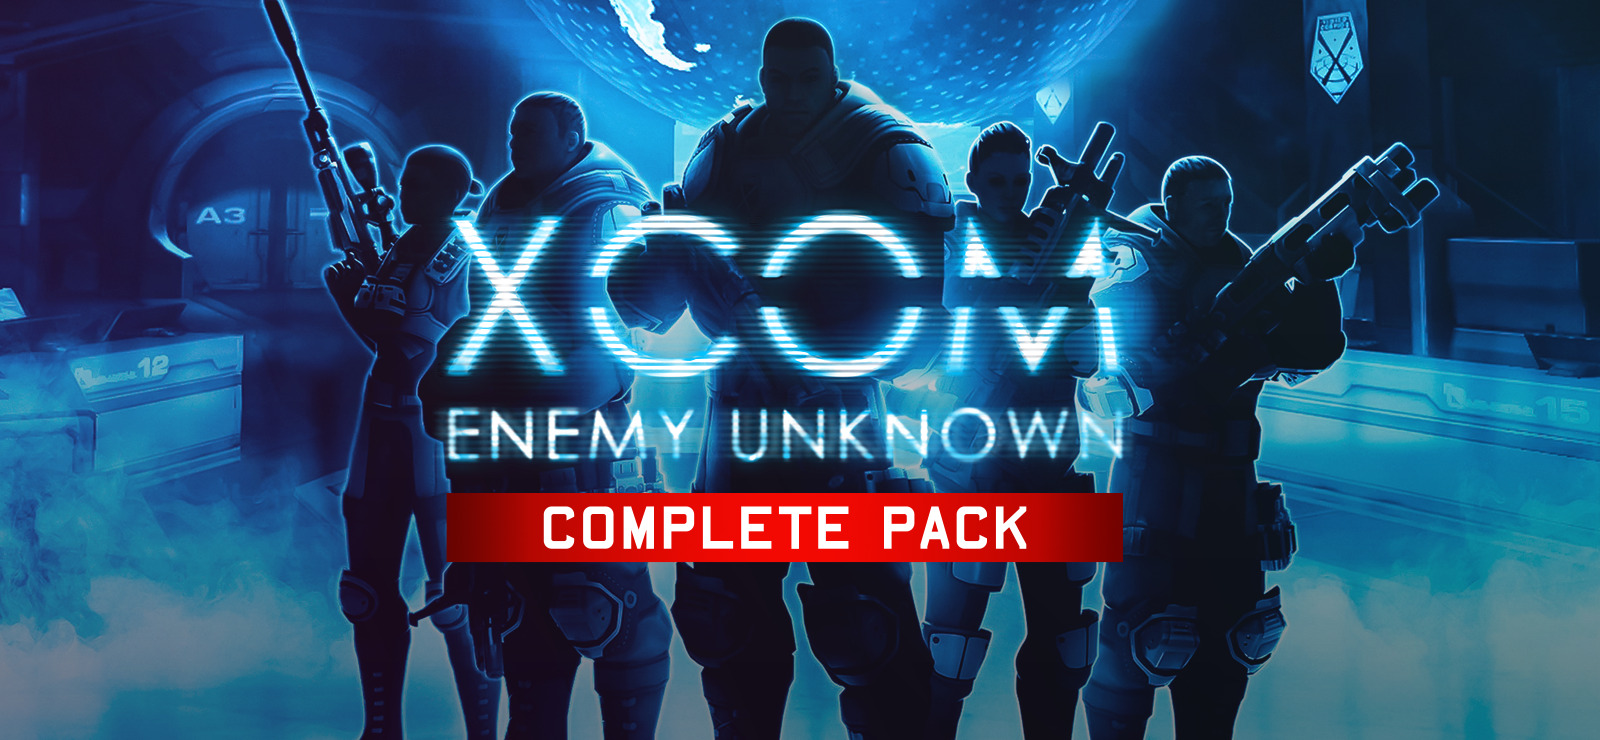 xcom enemy unknown classes